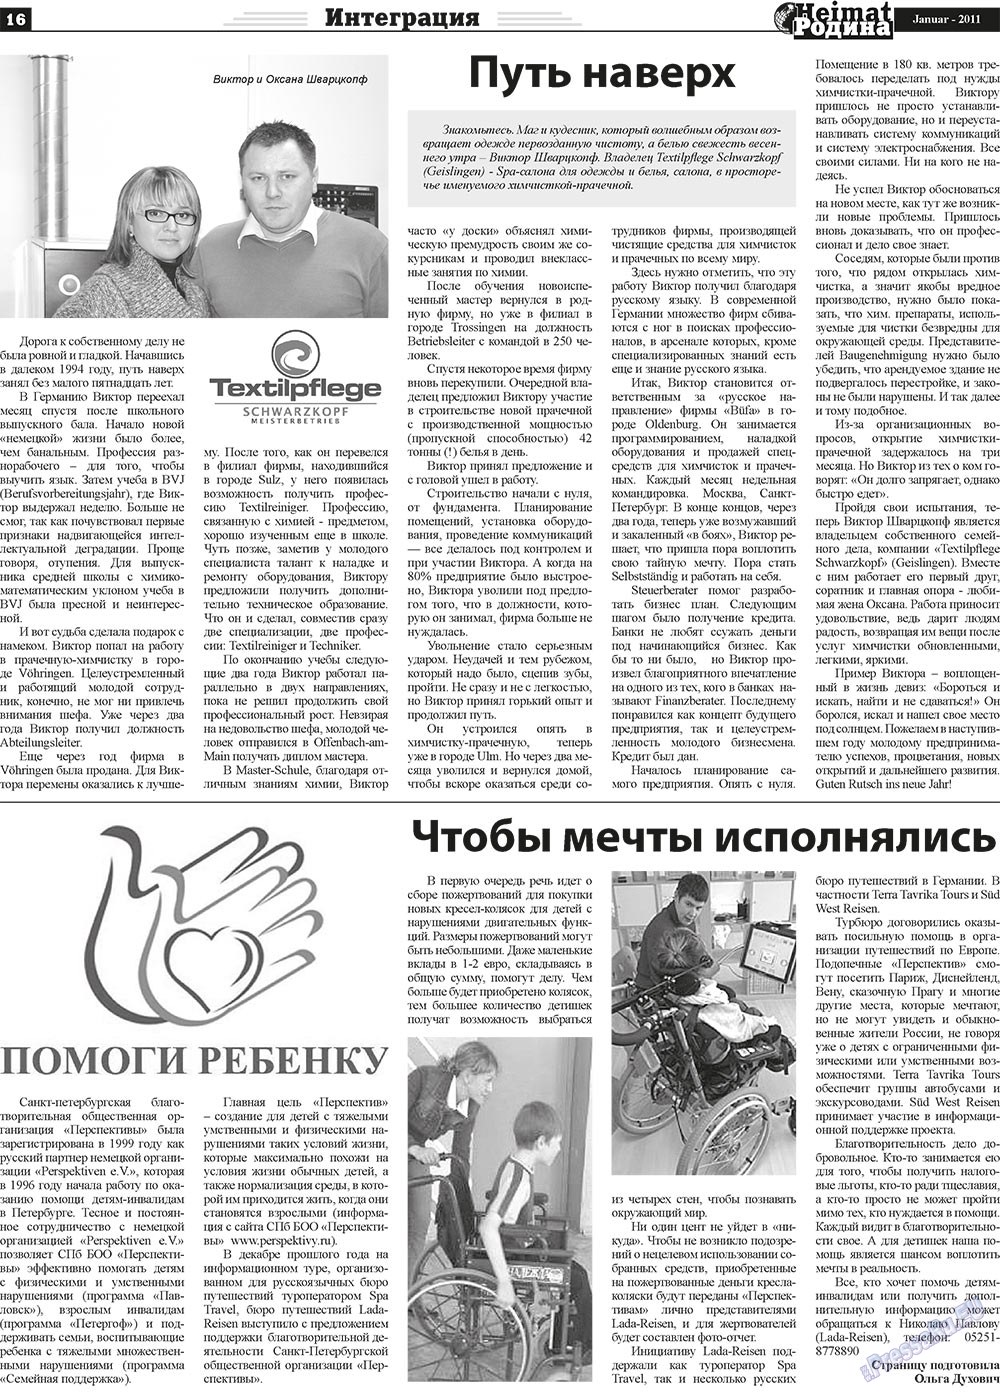 Heimat-Родина, газета. 2011 №1 стр.16